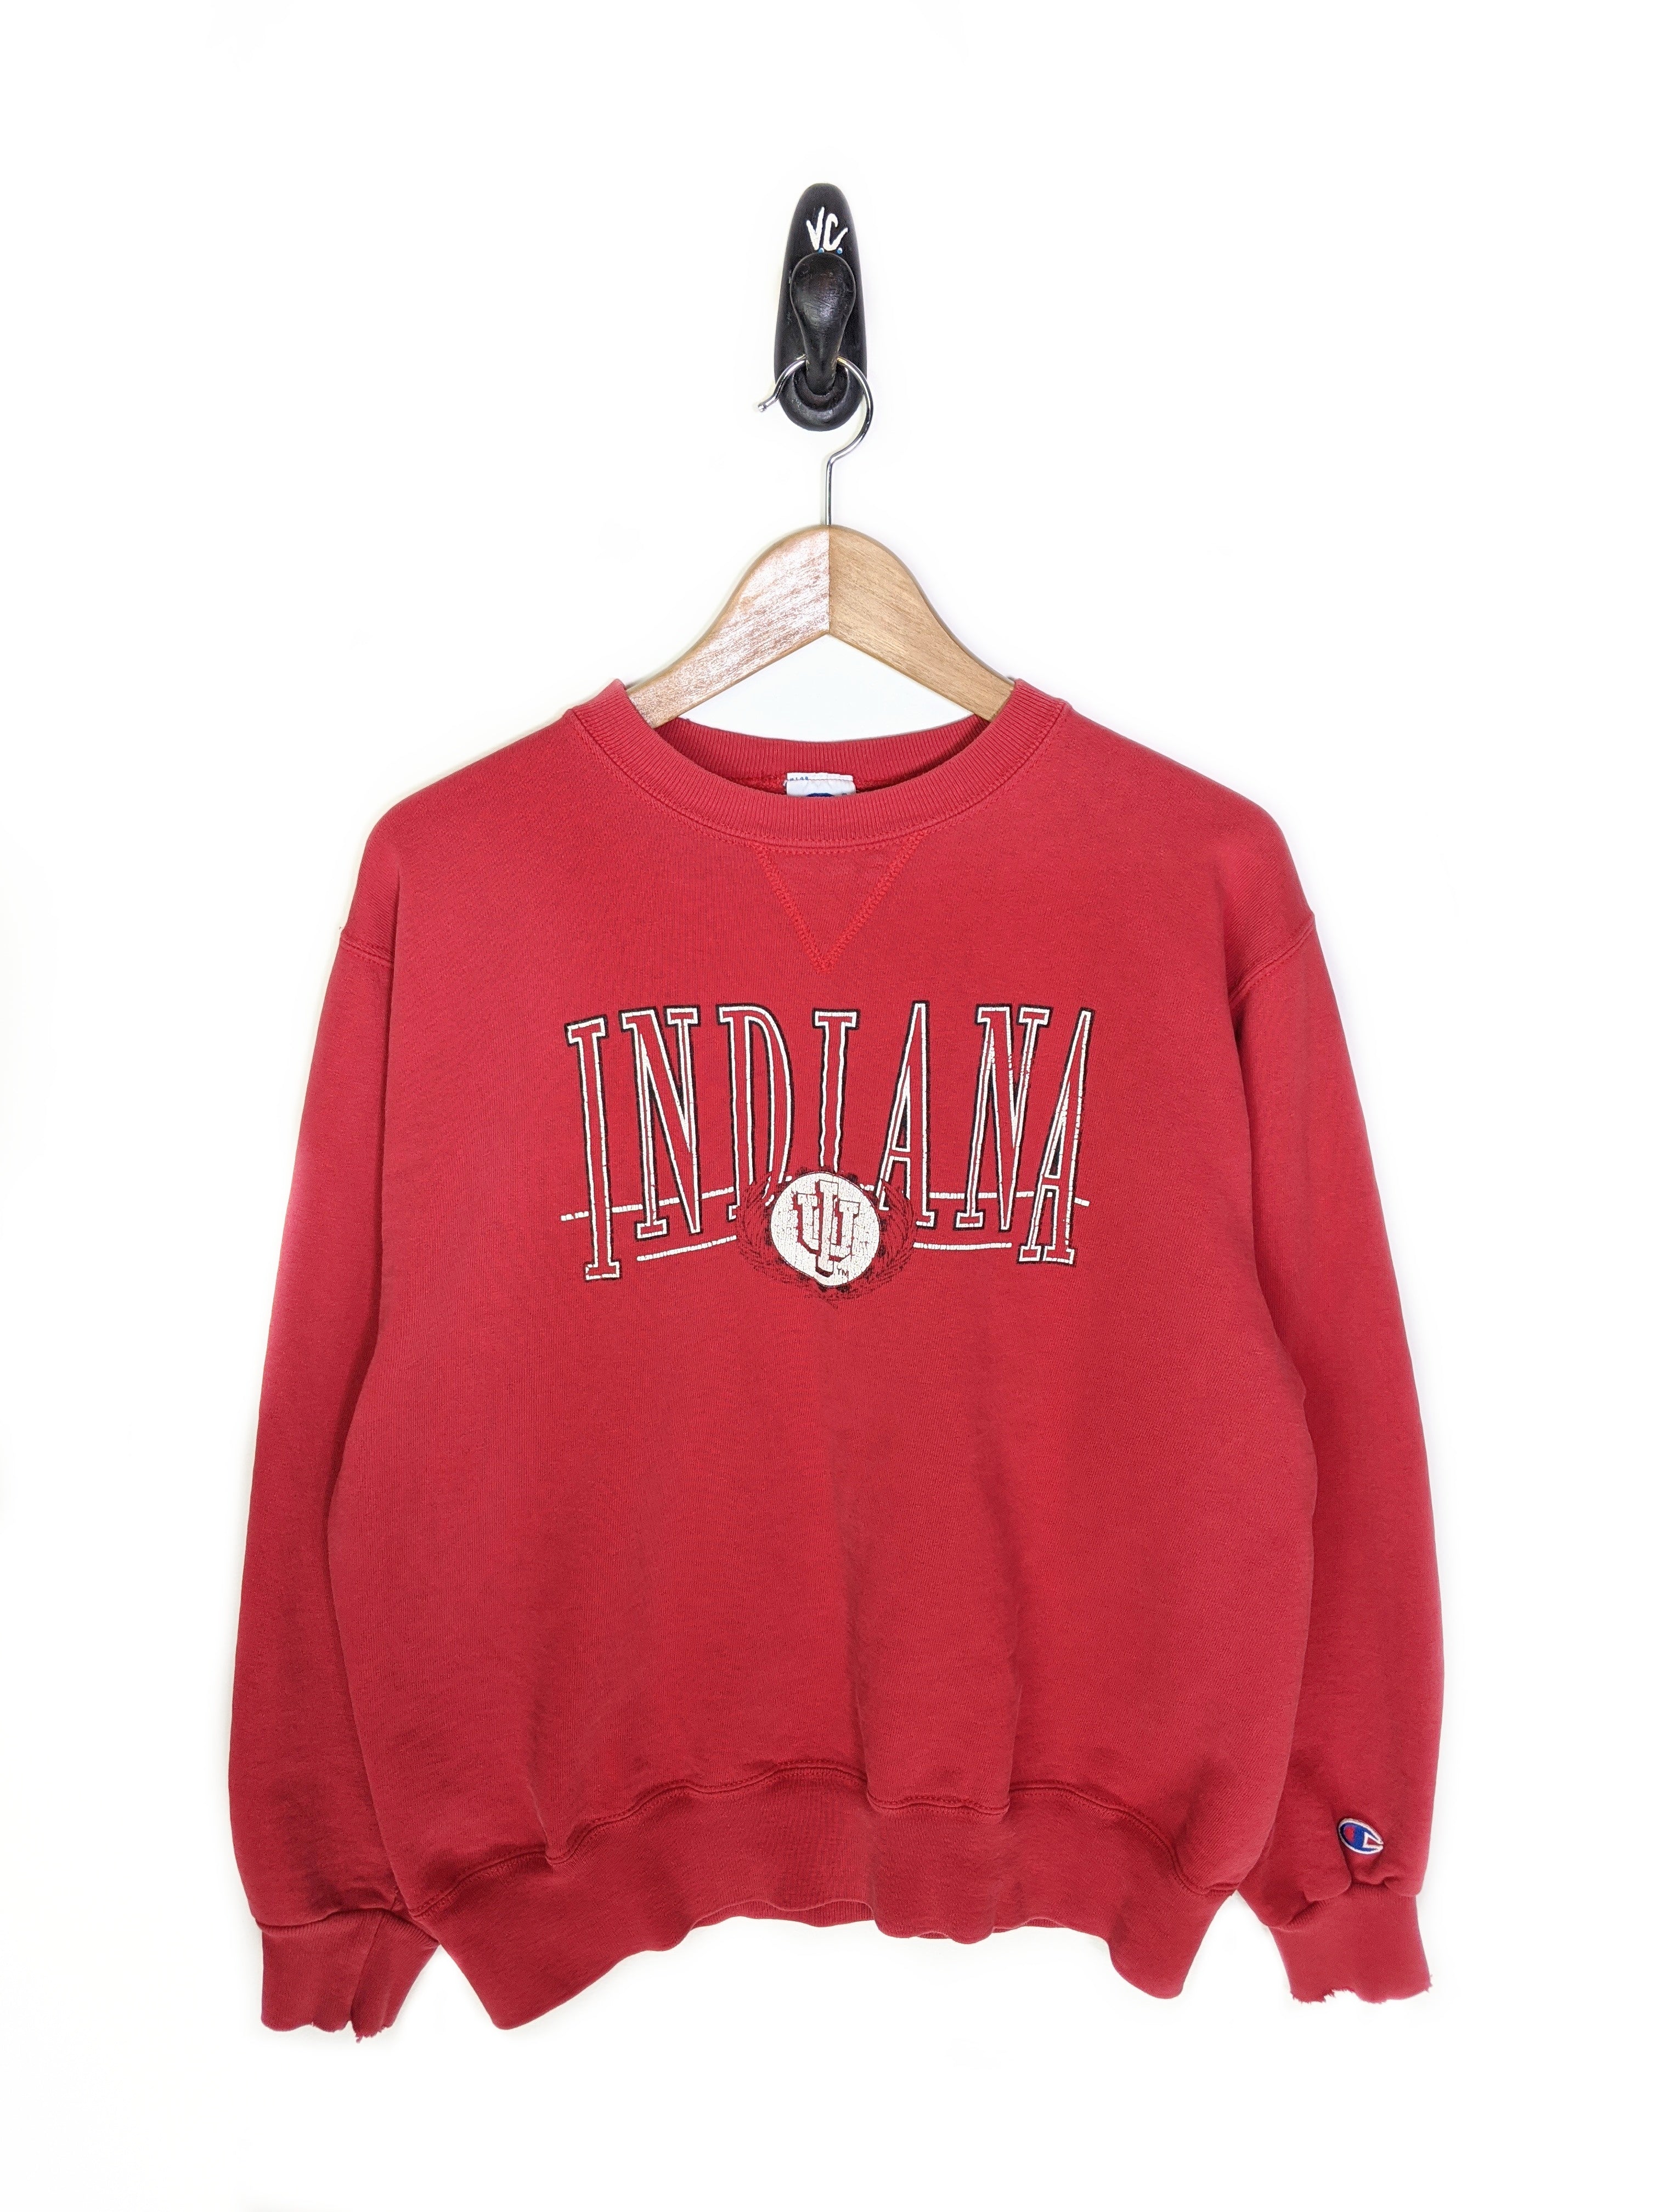 Vintage Indiana University Sweatshirt (L)